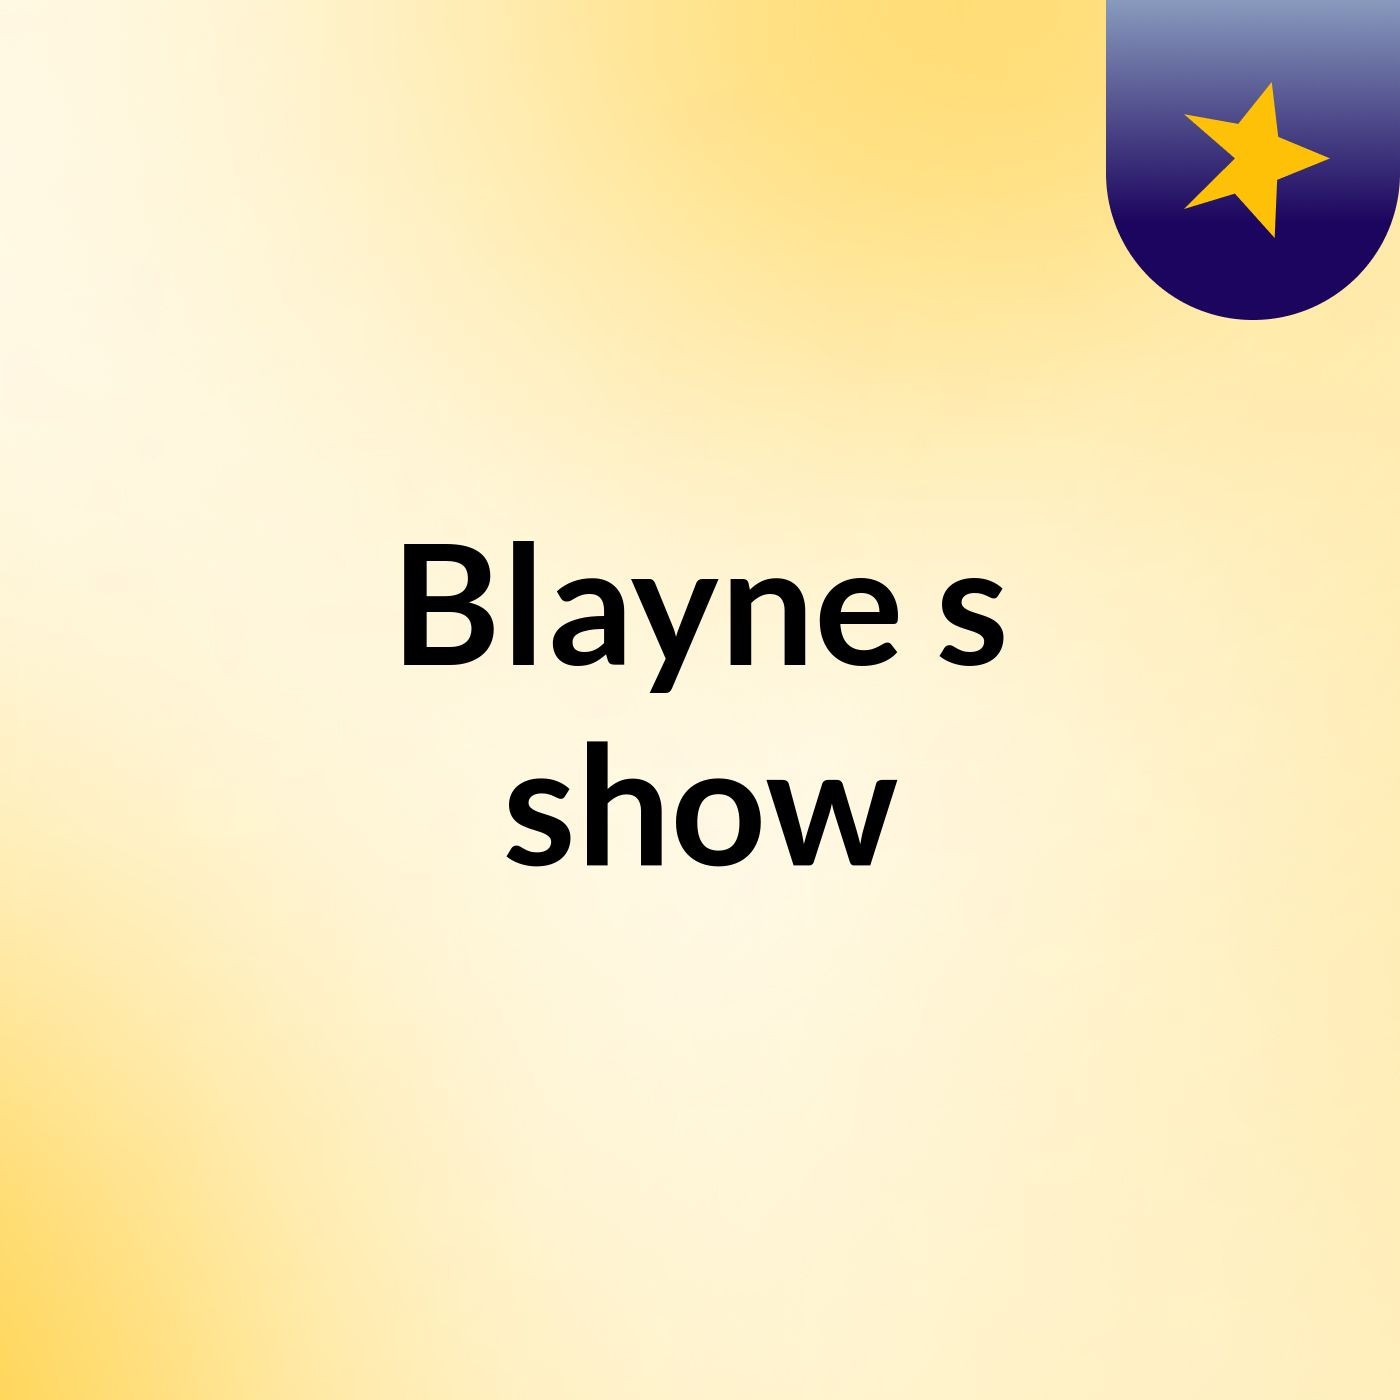 Blayne's show